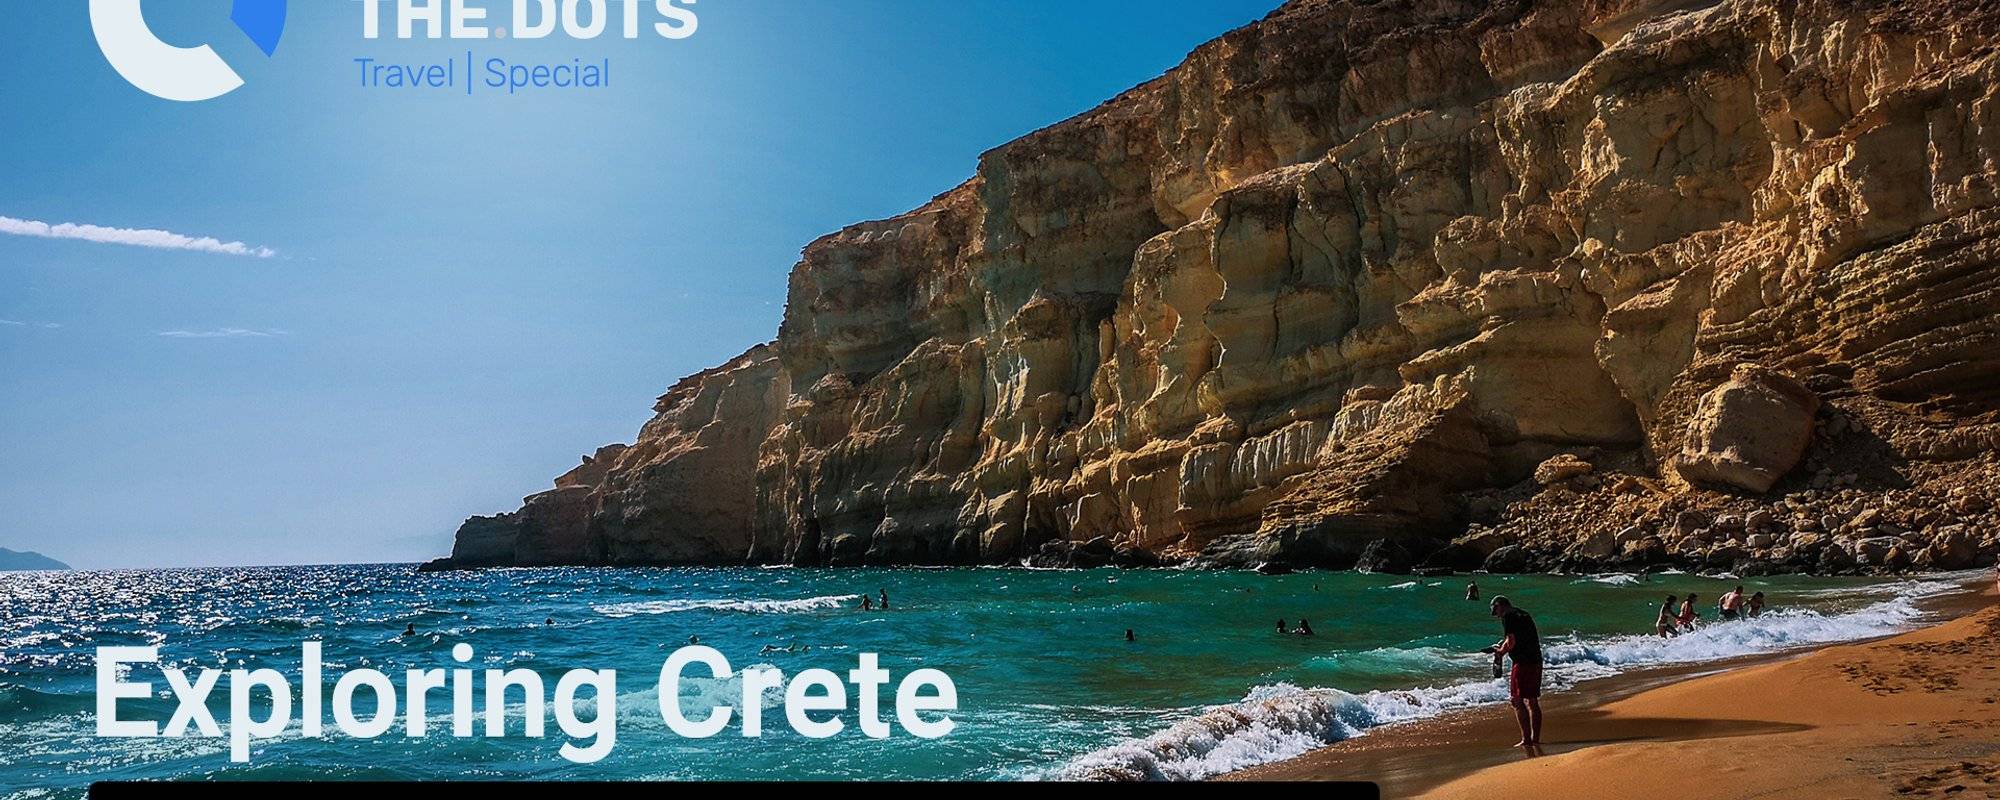 Exploring Mythological Crete and its beautiful beaches 1/2: Destination Matala Beach